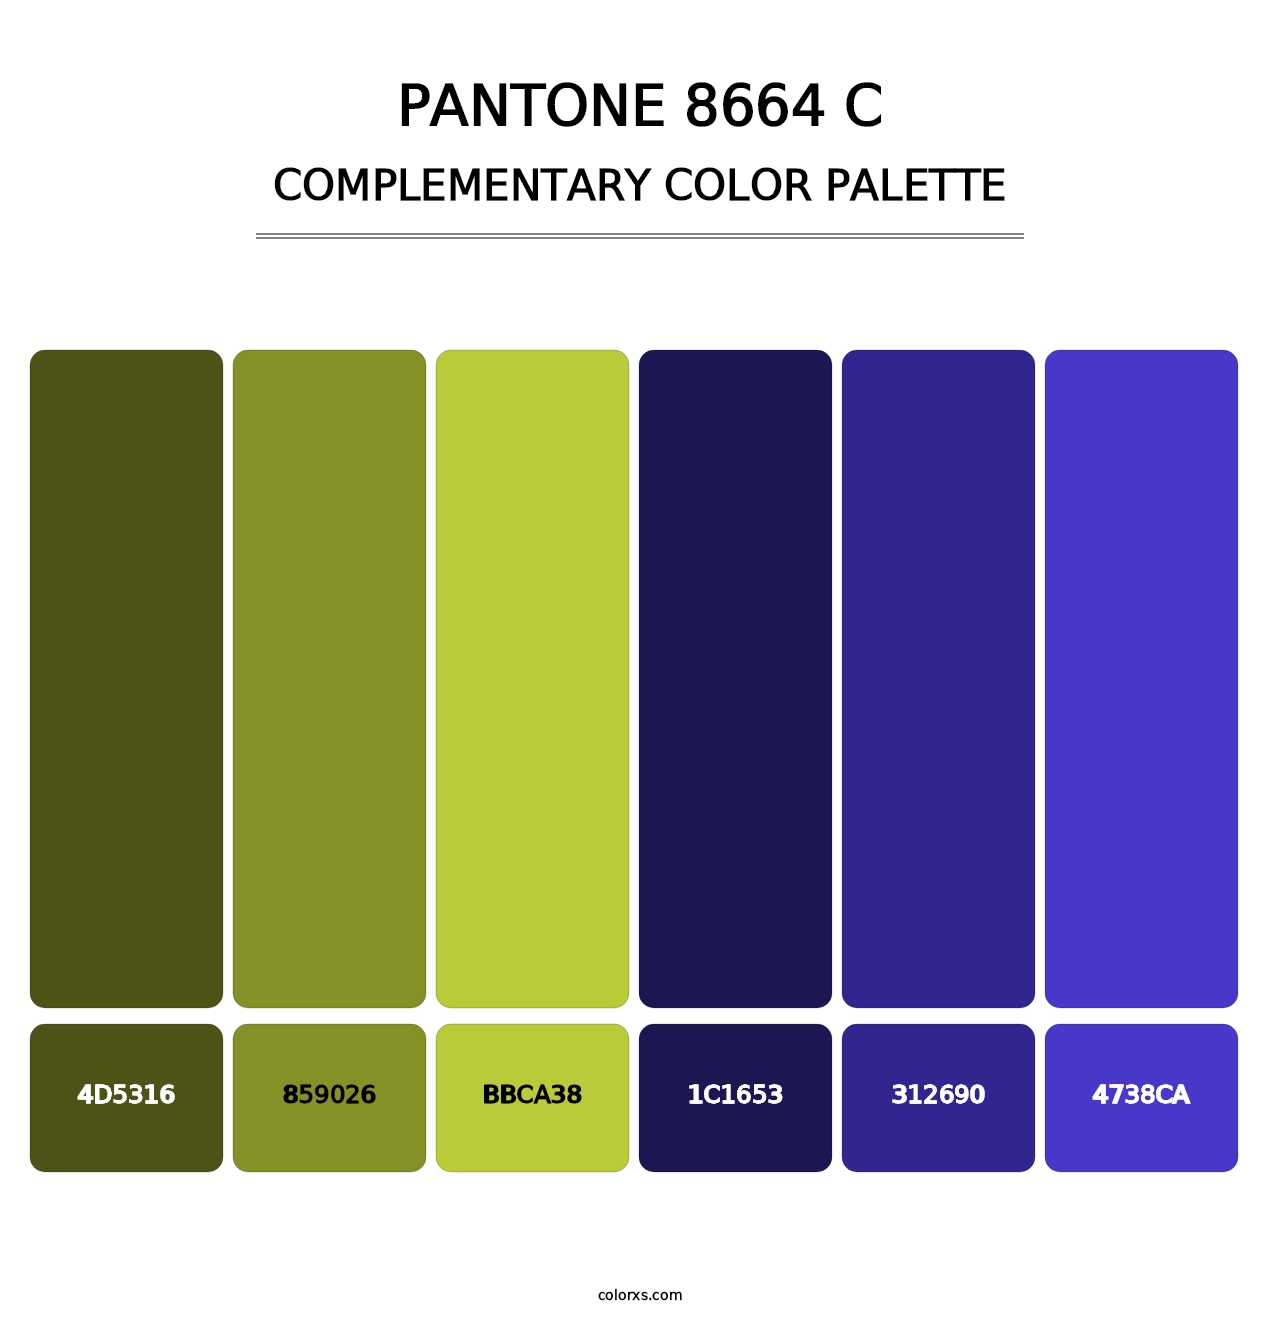 PANTONE 8664 C - Complementary Color Palette